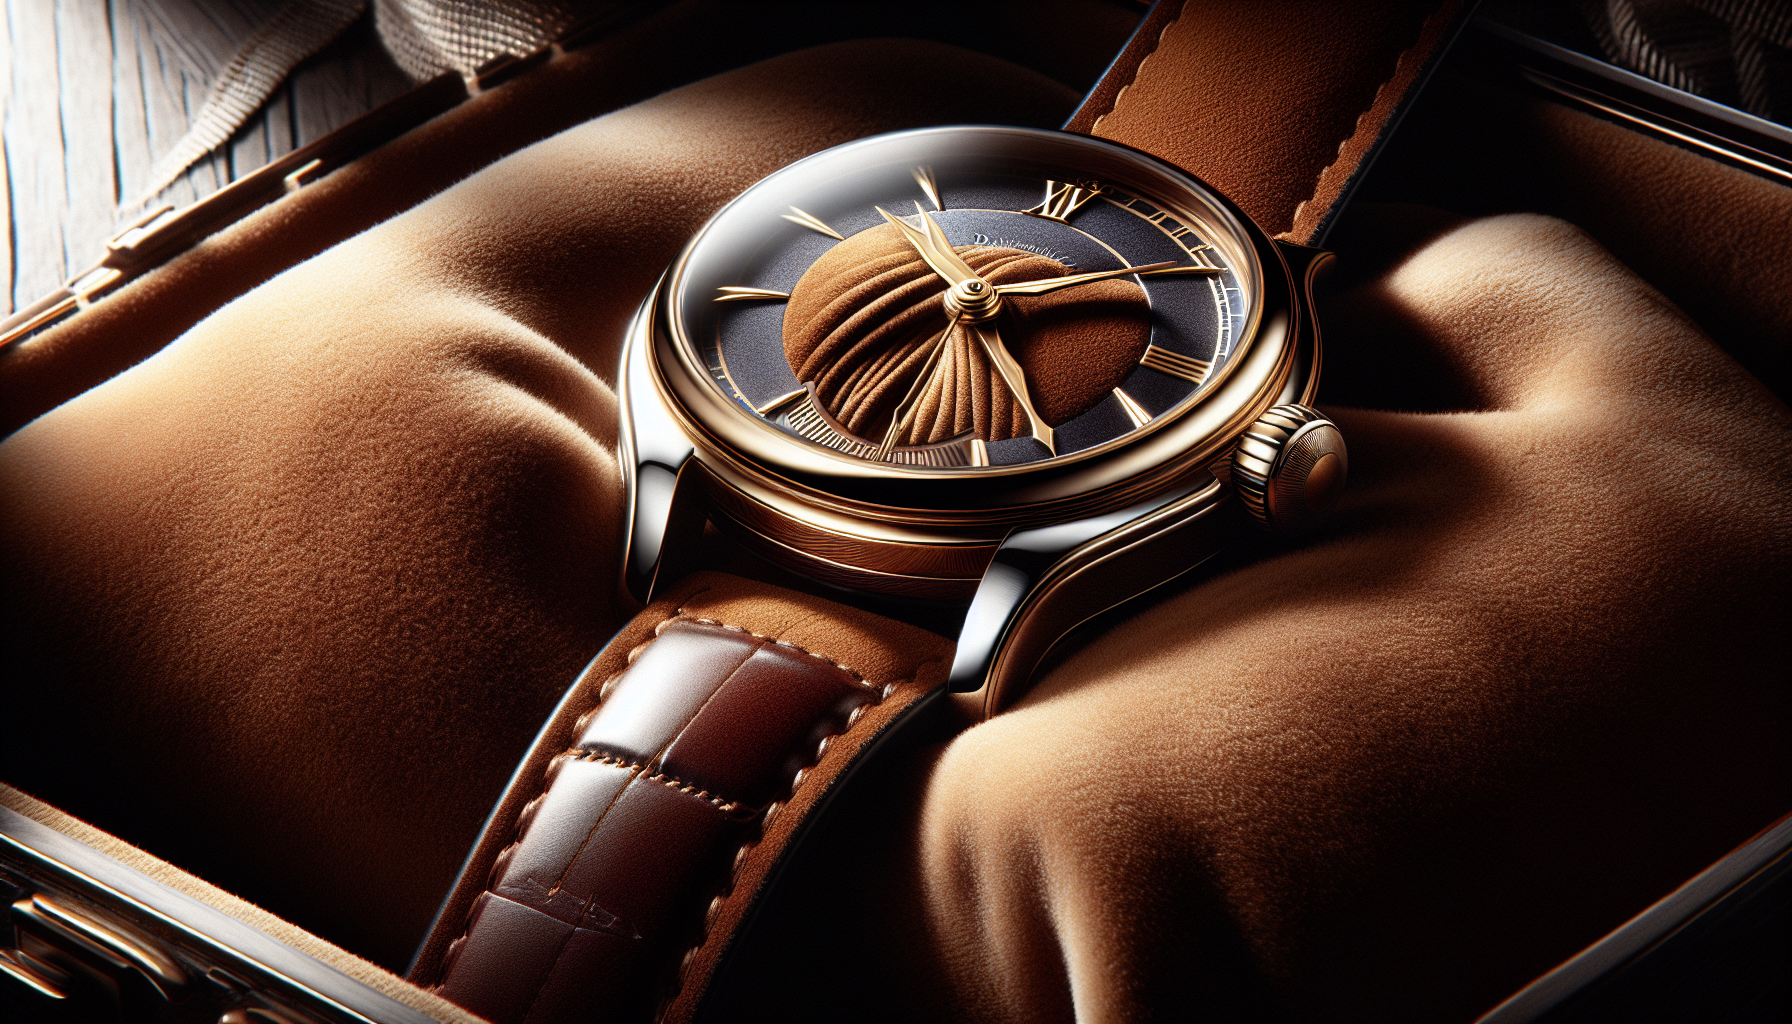 Suede watch strap coiled around a stylish timepiece